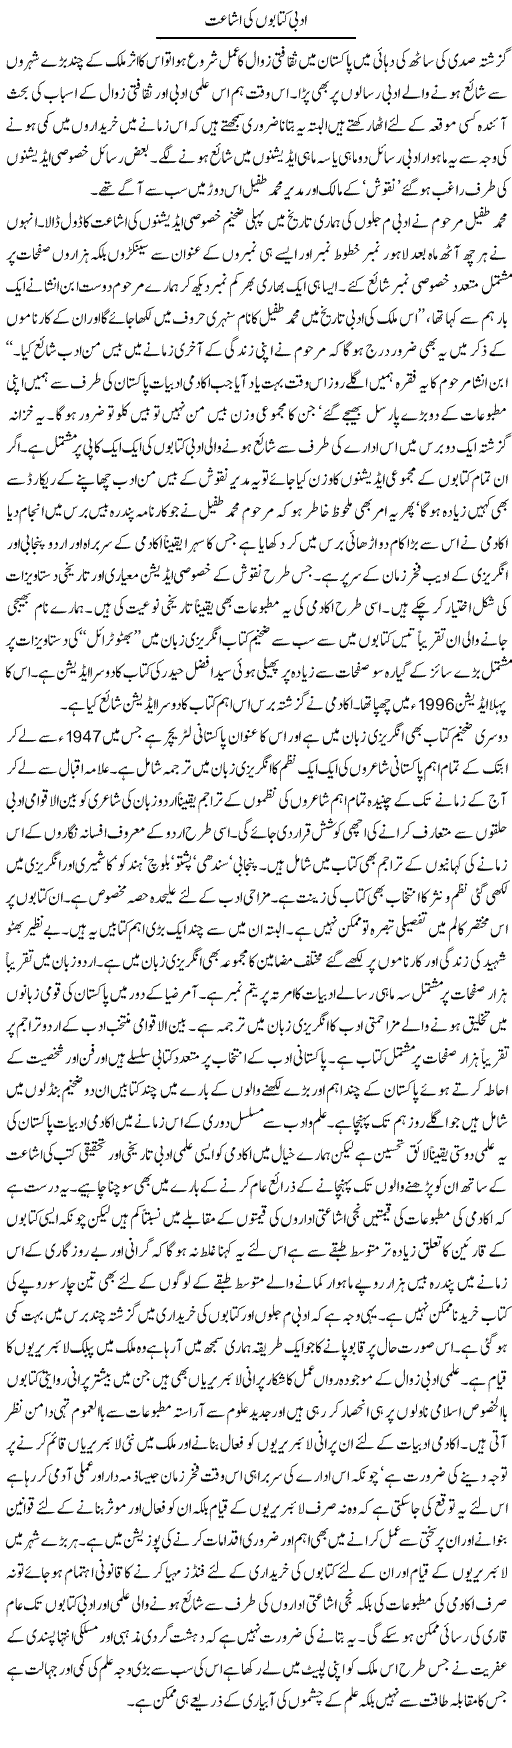 Urdu Literature Express Column Hameed Akhtar 26 October 2010